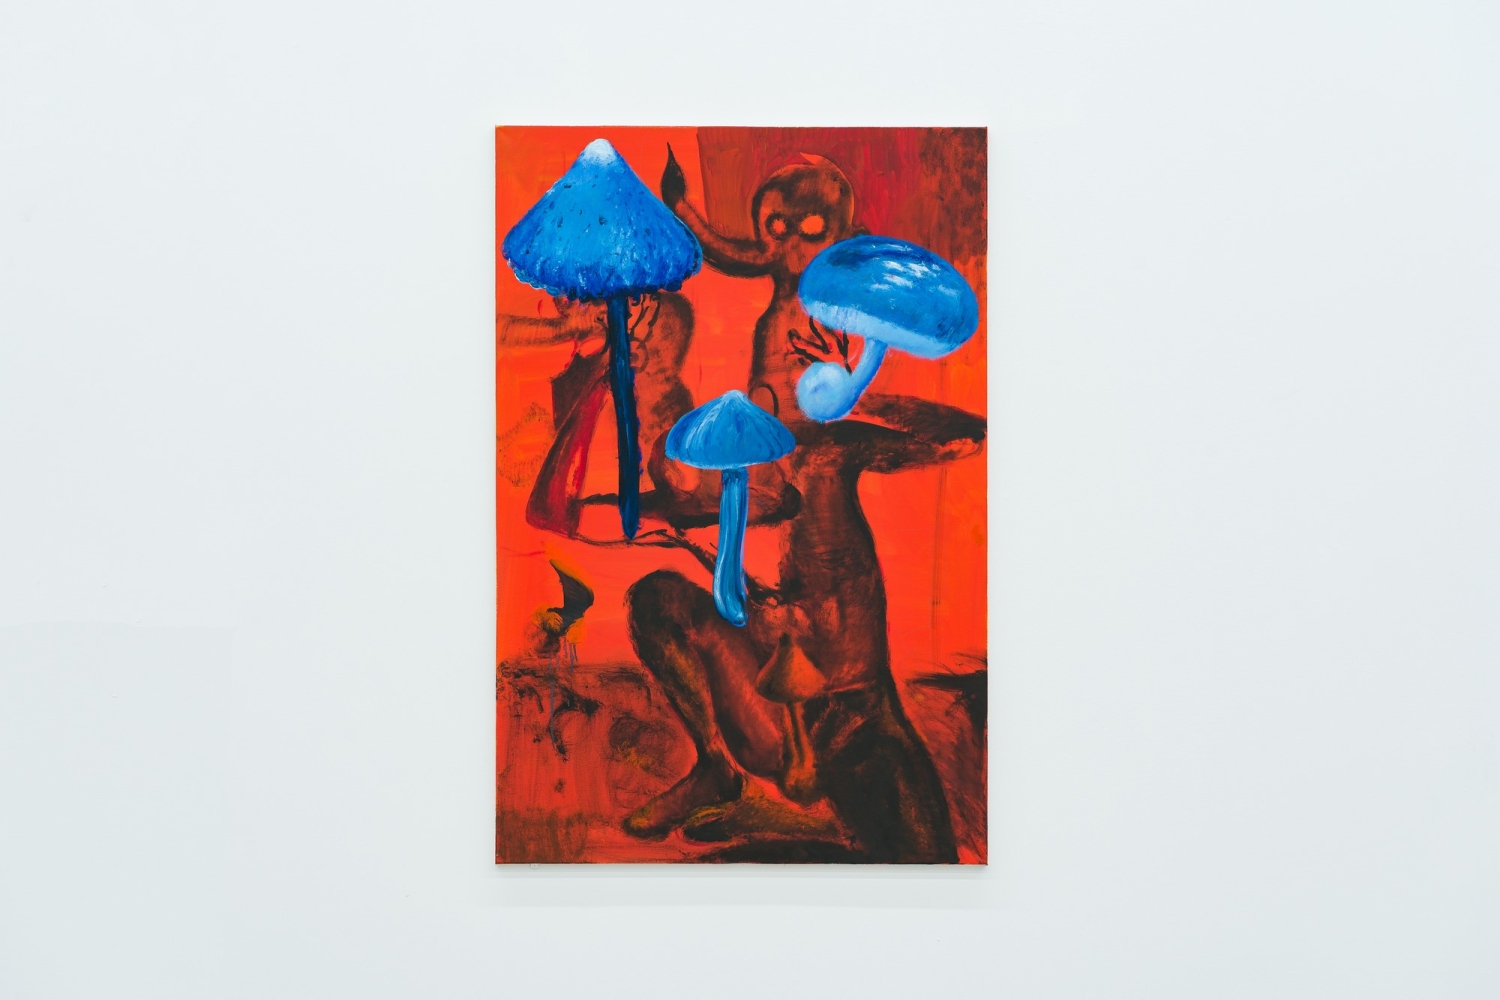 Razvan Boar&amp;nbsp;

Untitled,&amp;nbsp;2022

Oil on canvas&amp;nbsp;

150h x 100w cm.

59.06h x 39.37w in.